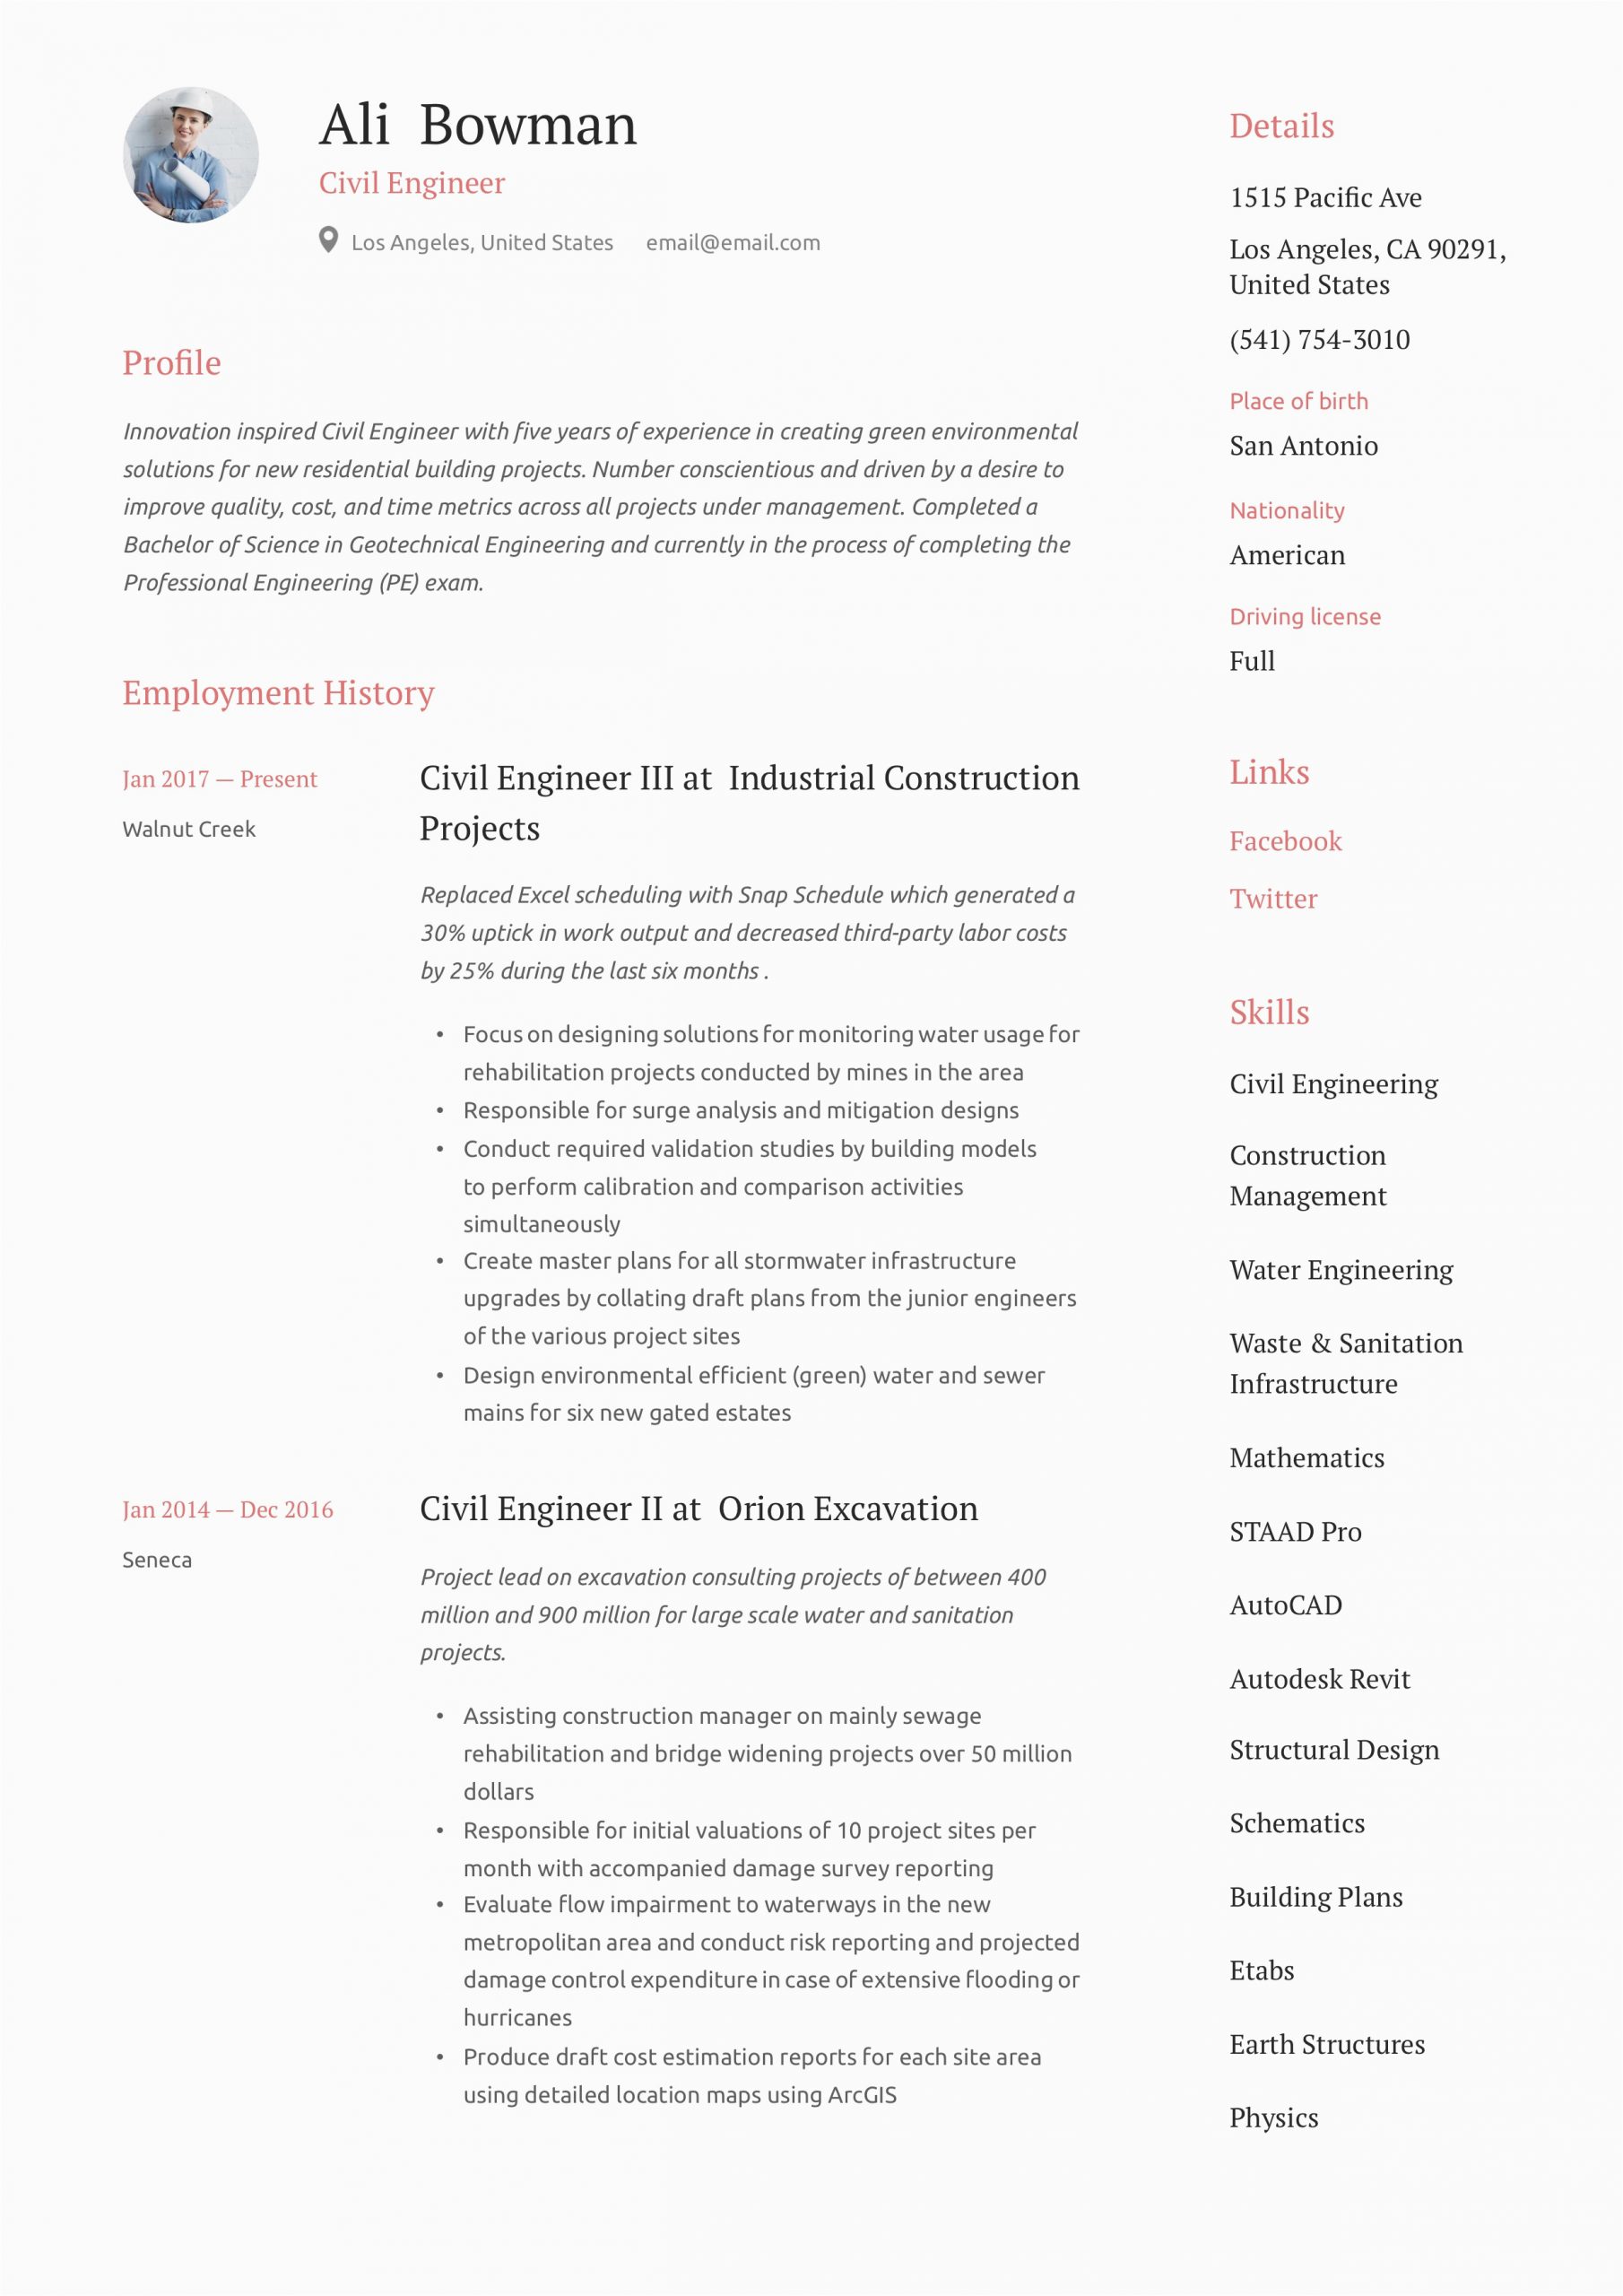 Free Resume Templates for Civil Engineers Civil Engineer Resume & Writing Guide